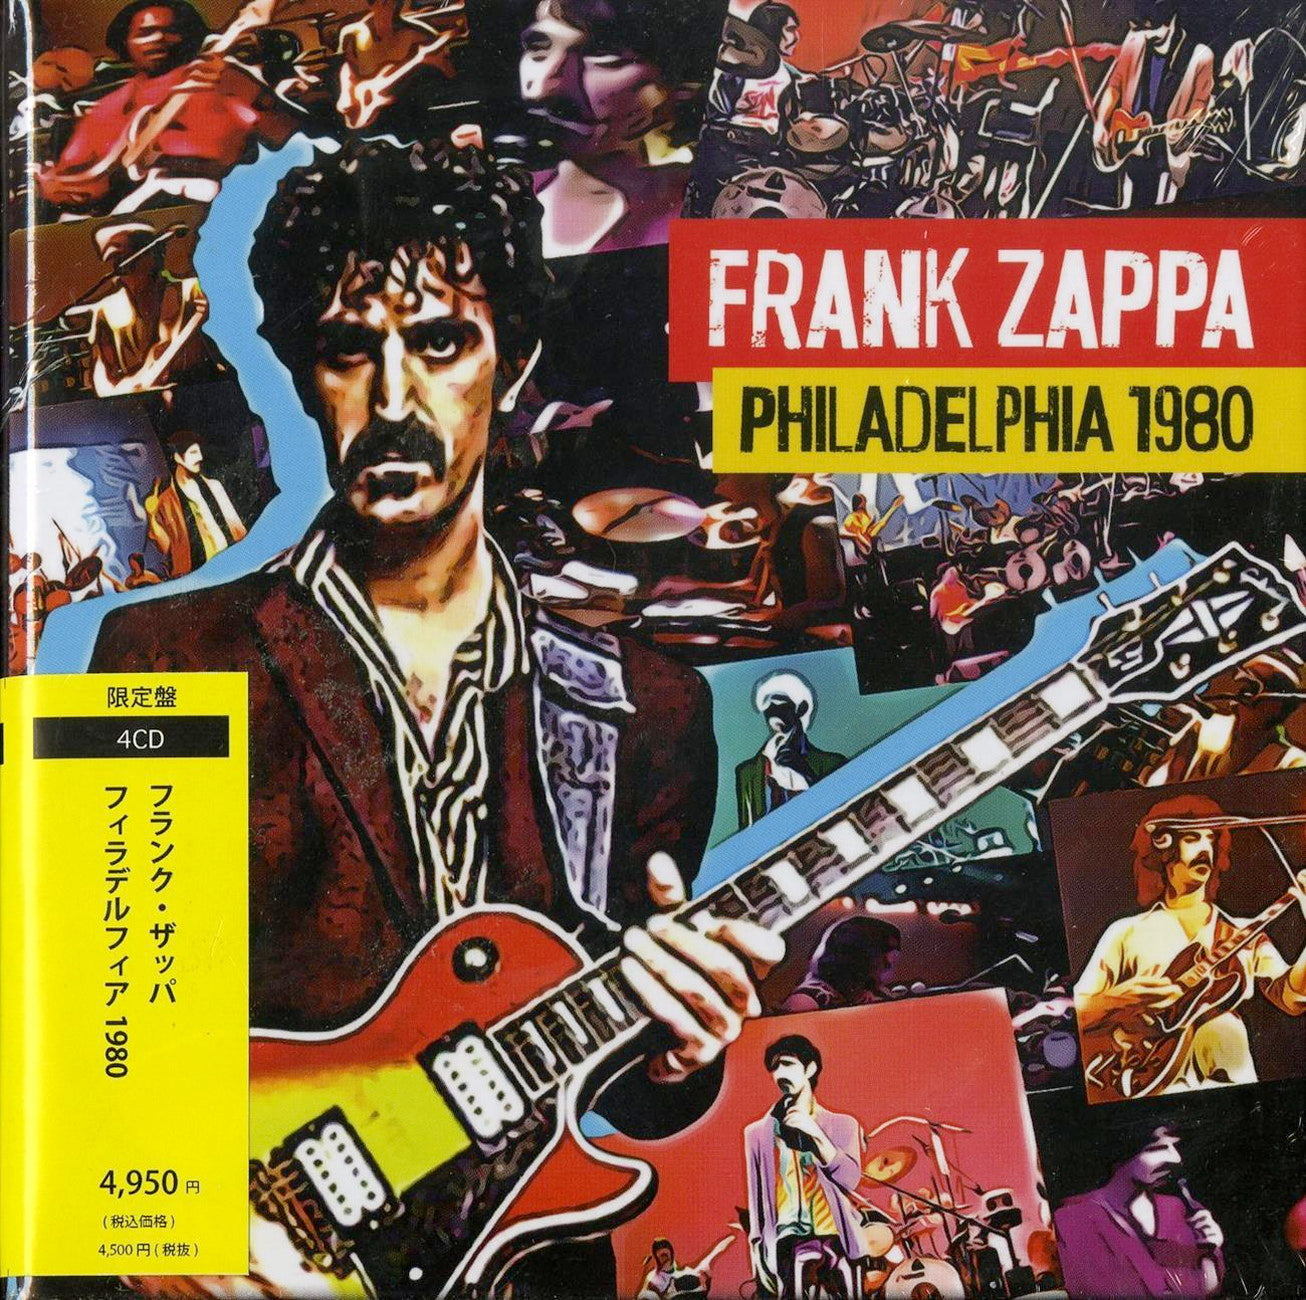 Frank Zappa - Philadelphia 1980 - Import 4 CD Limited Edition